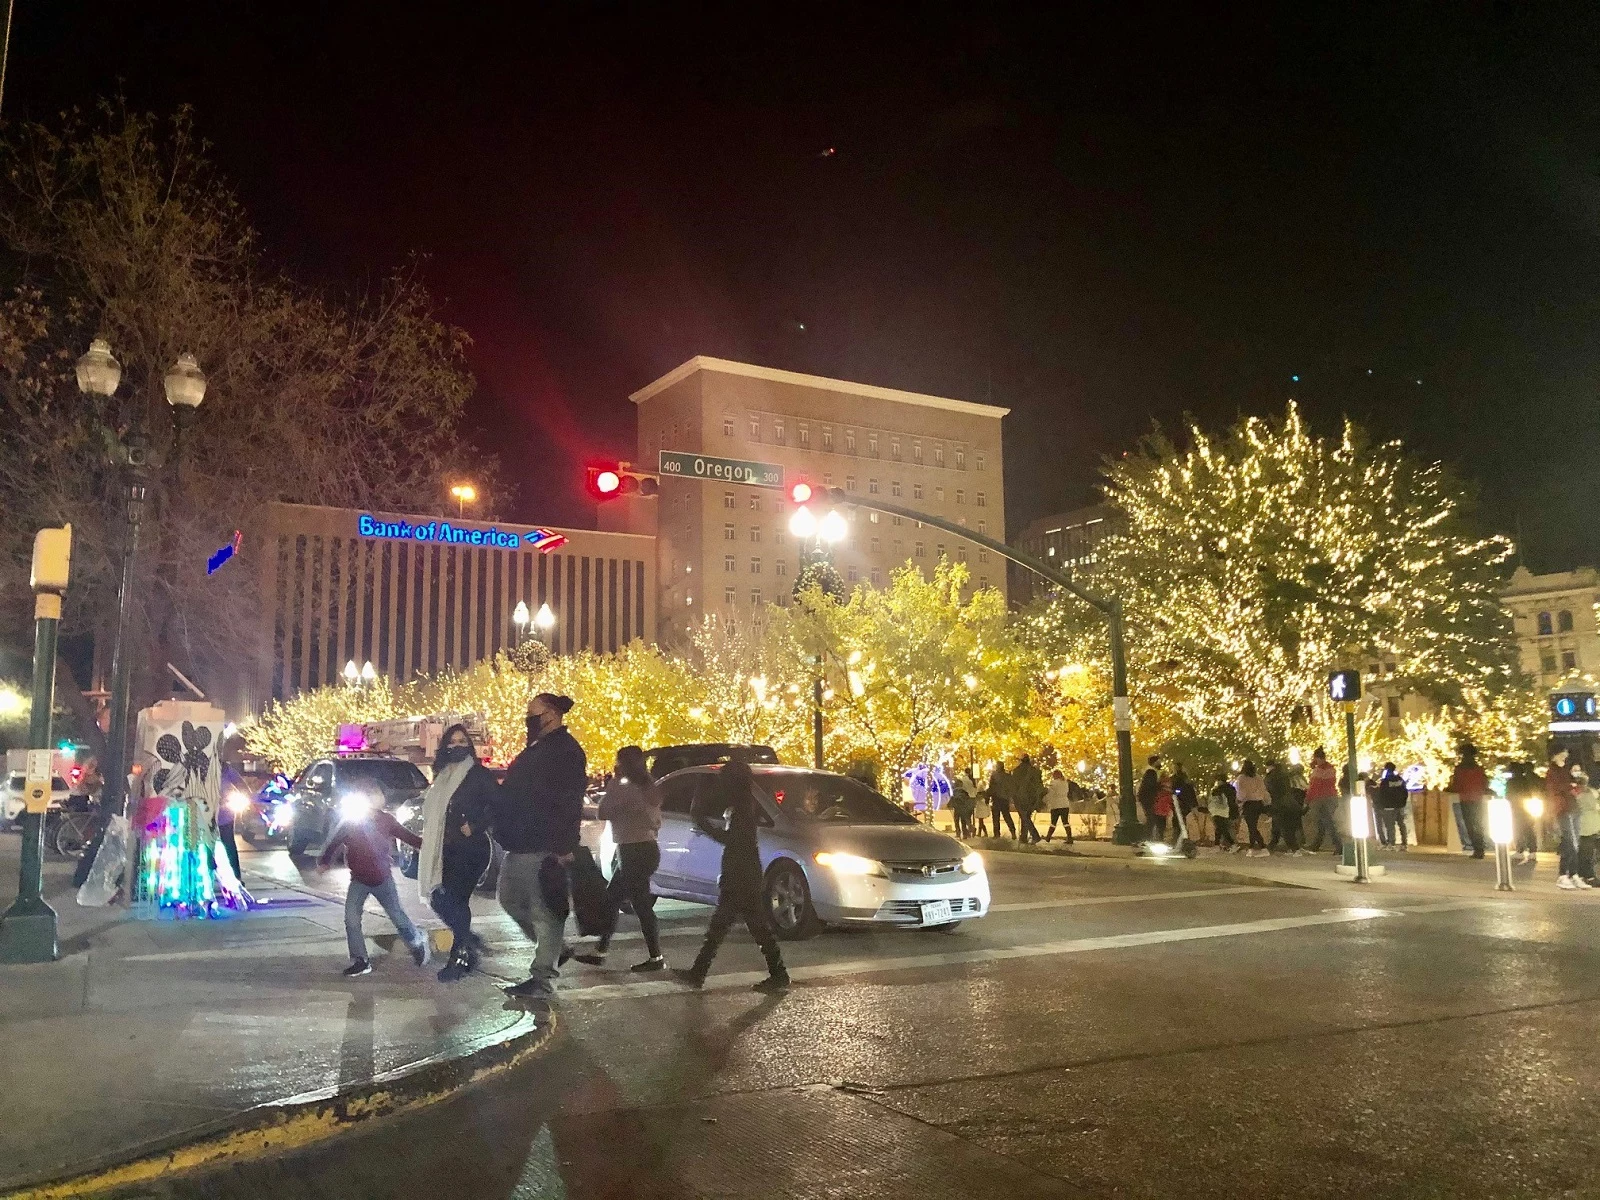 El Paso’s 76th Annual Christmas Tree Lighting Ceremony is Tonight